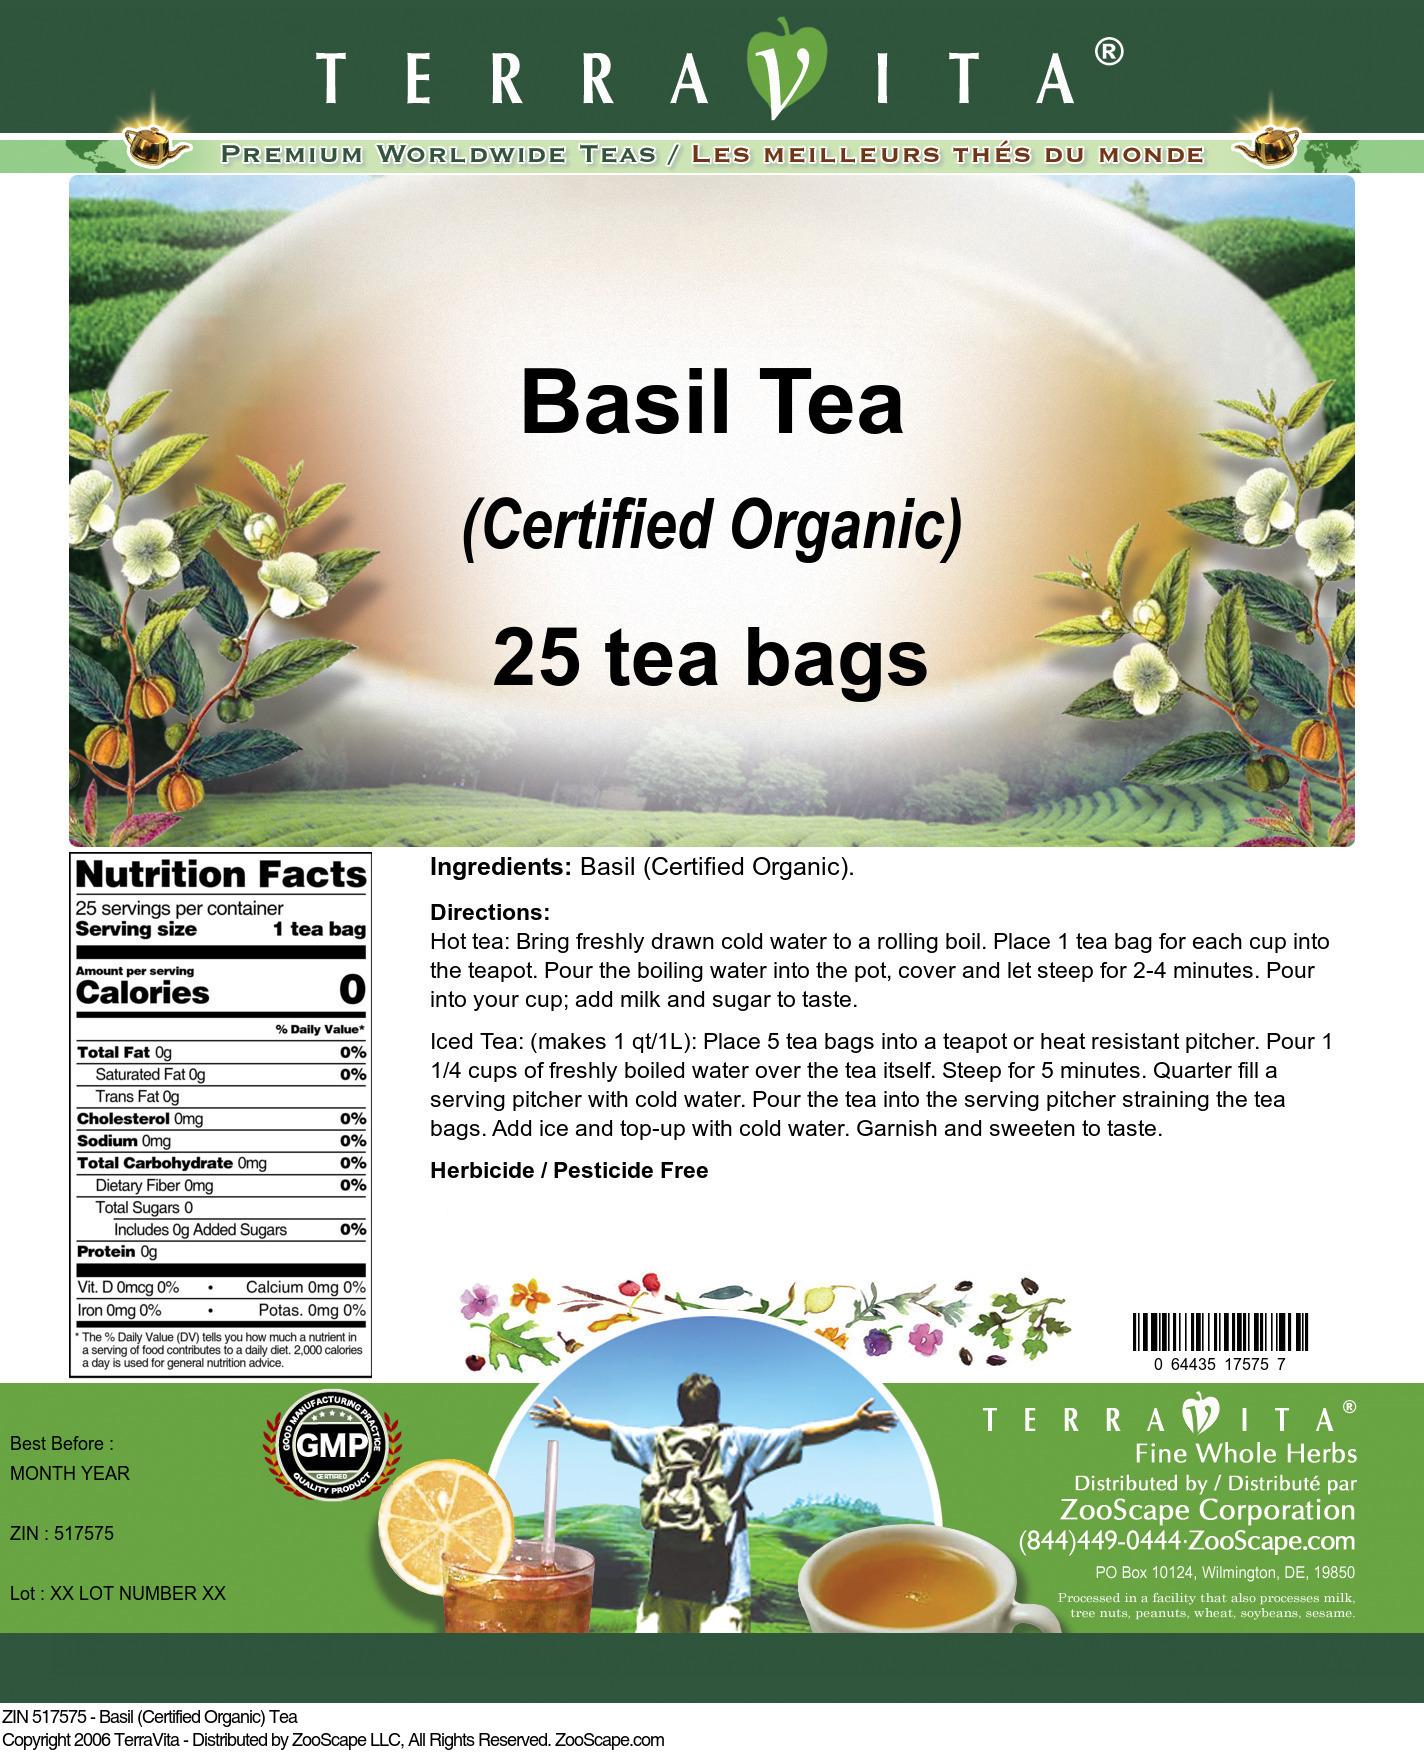 Basil (Certified Organic) Tea - Label